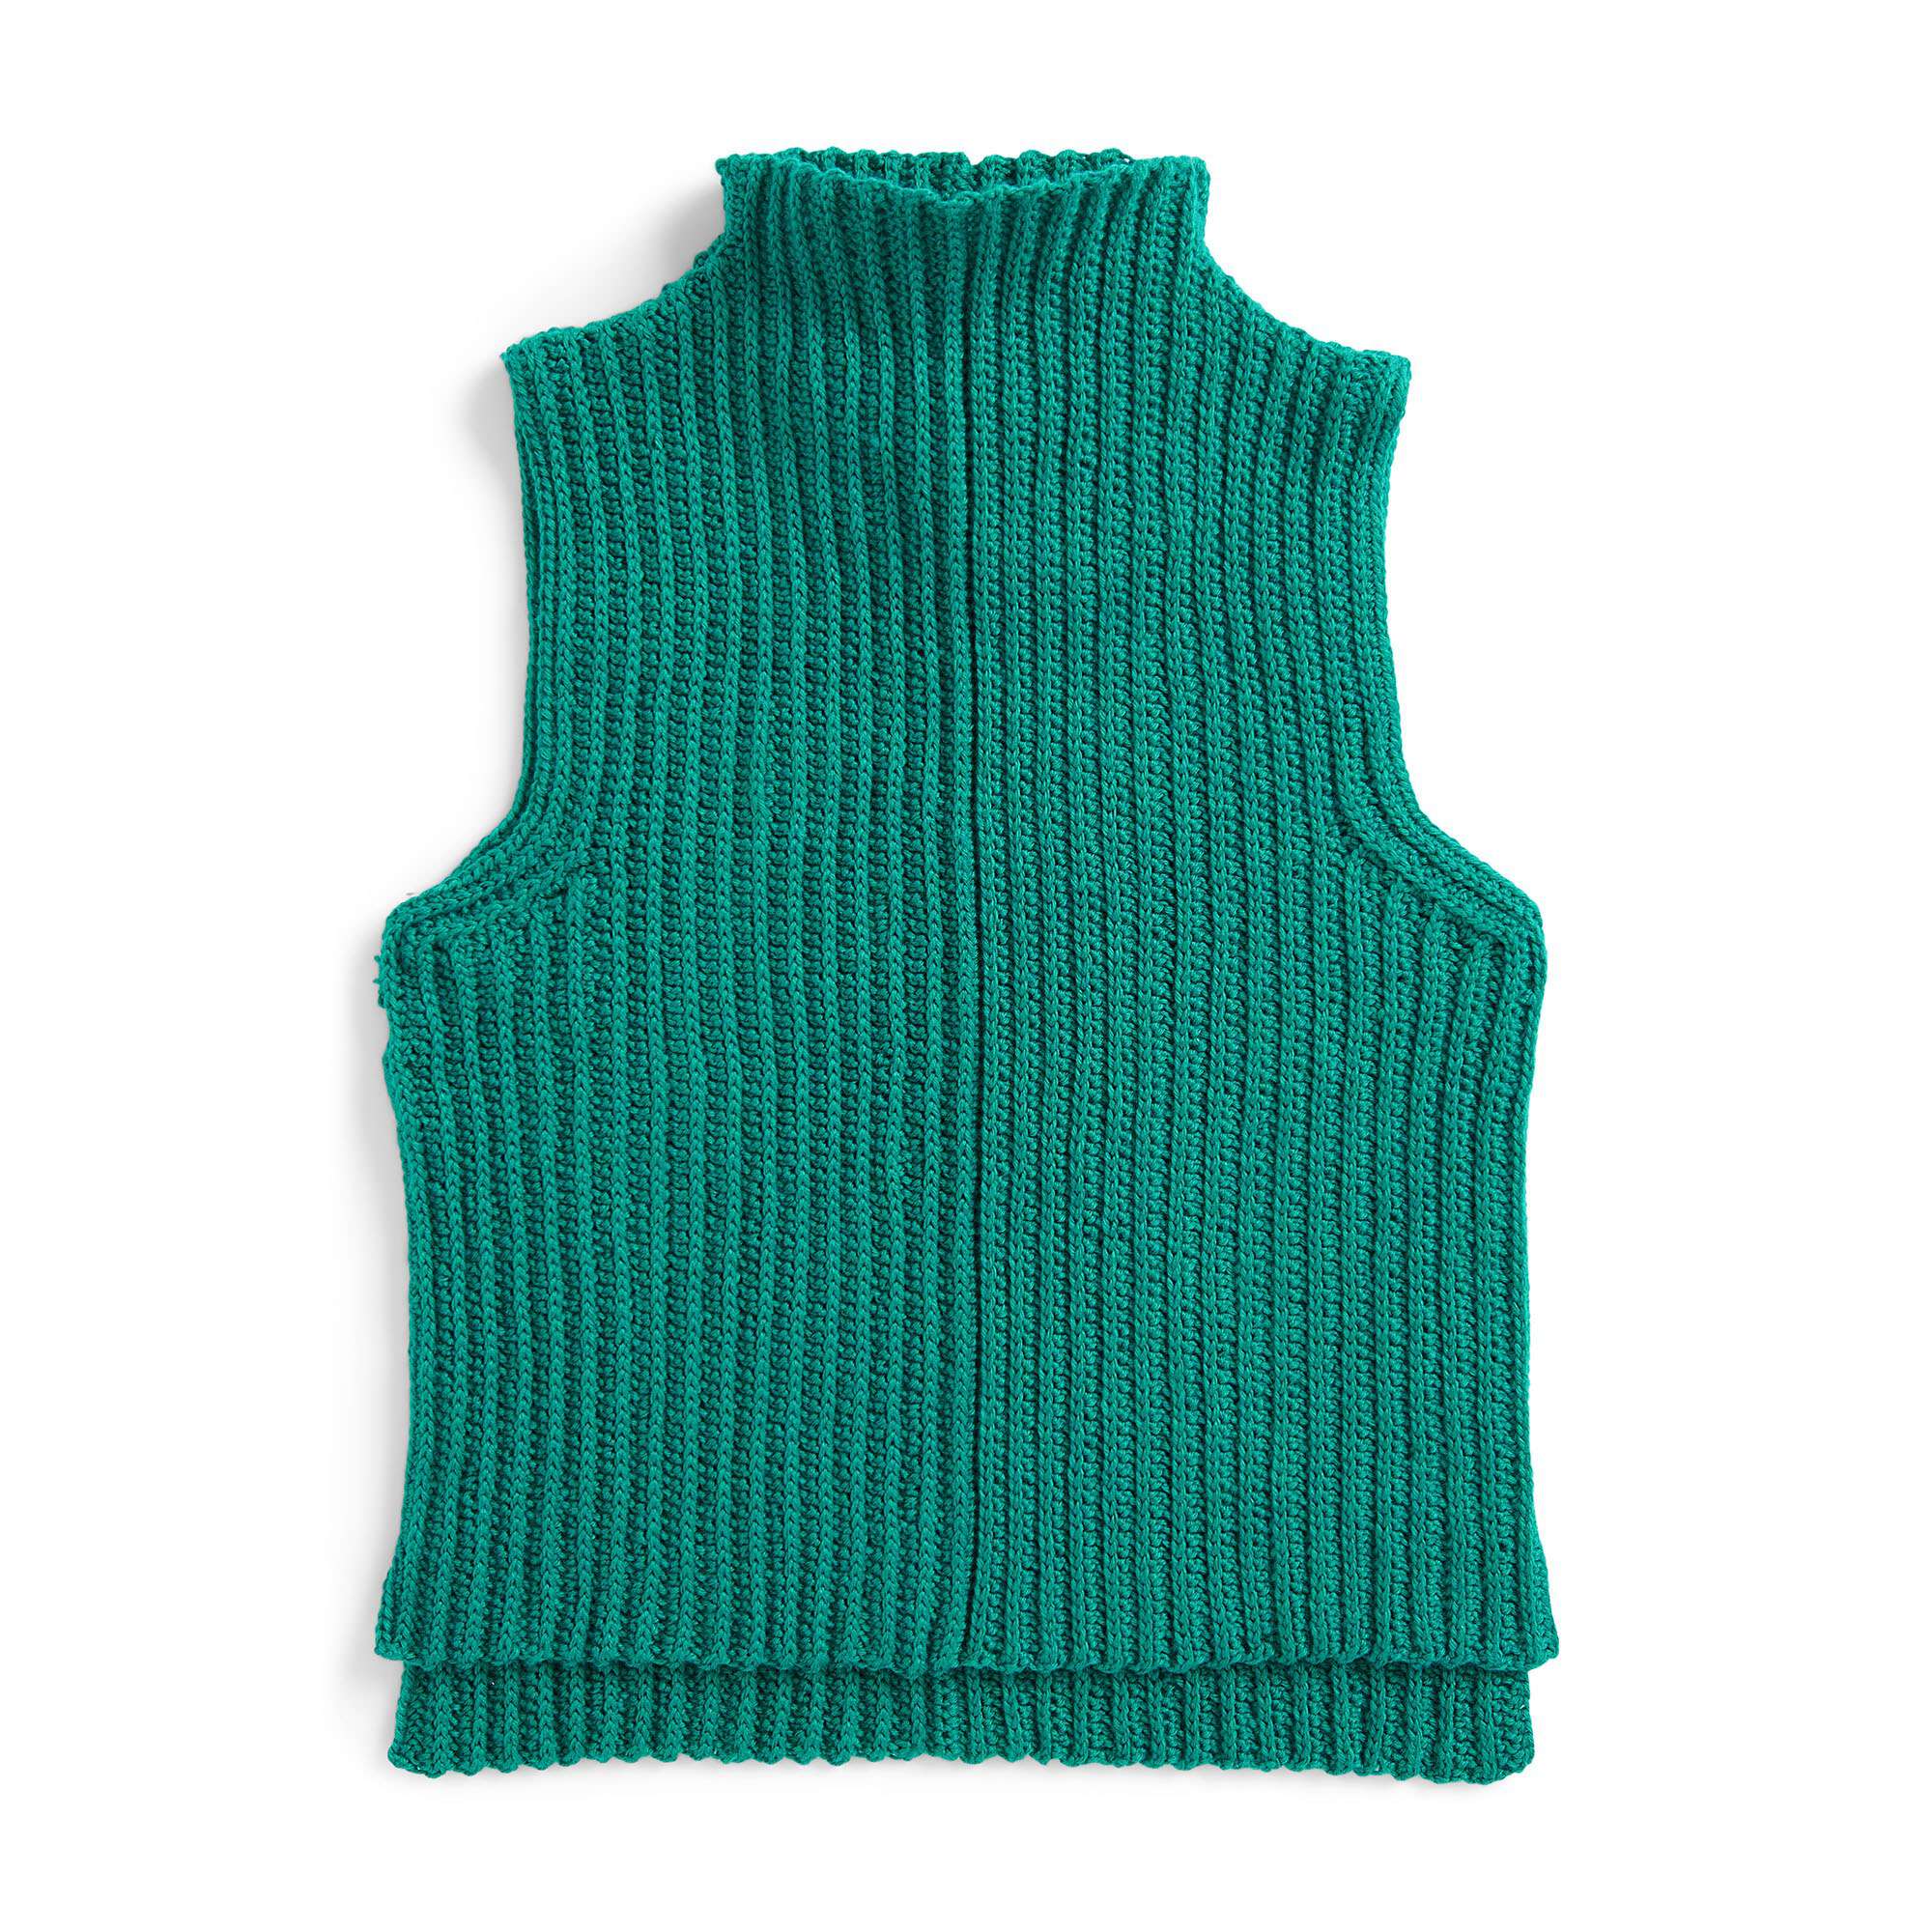 Fabwoolous Ribbed Crochet Vest